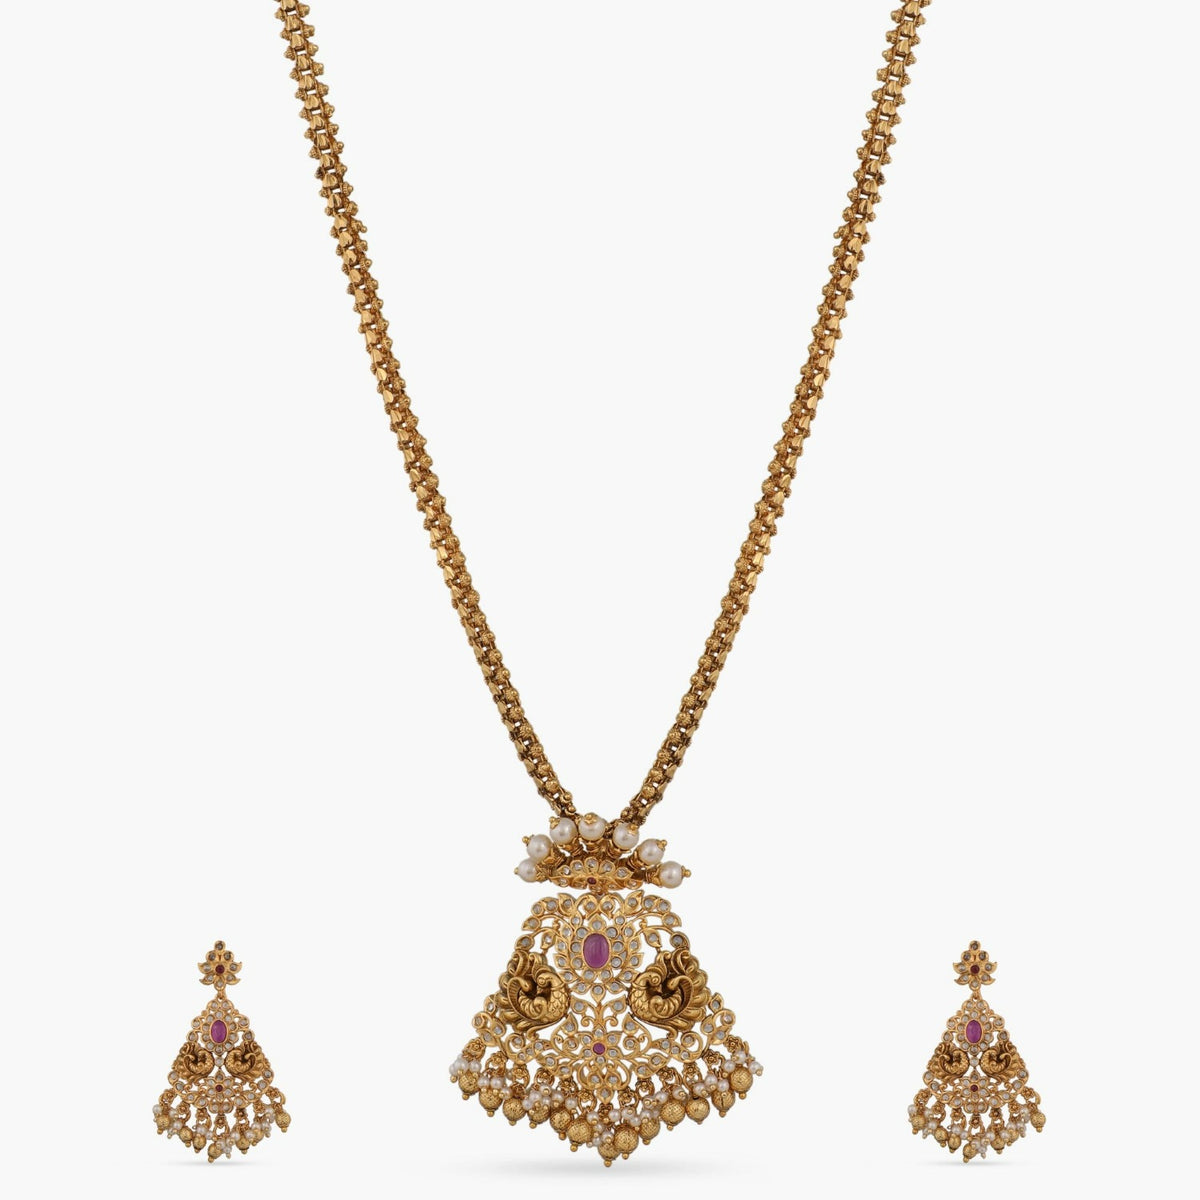 Buy Indian Antique Pendant Sets Online at Tarinika | Shop Now